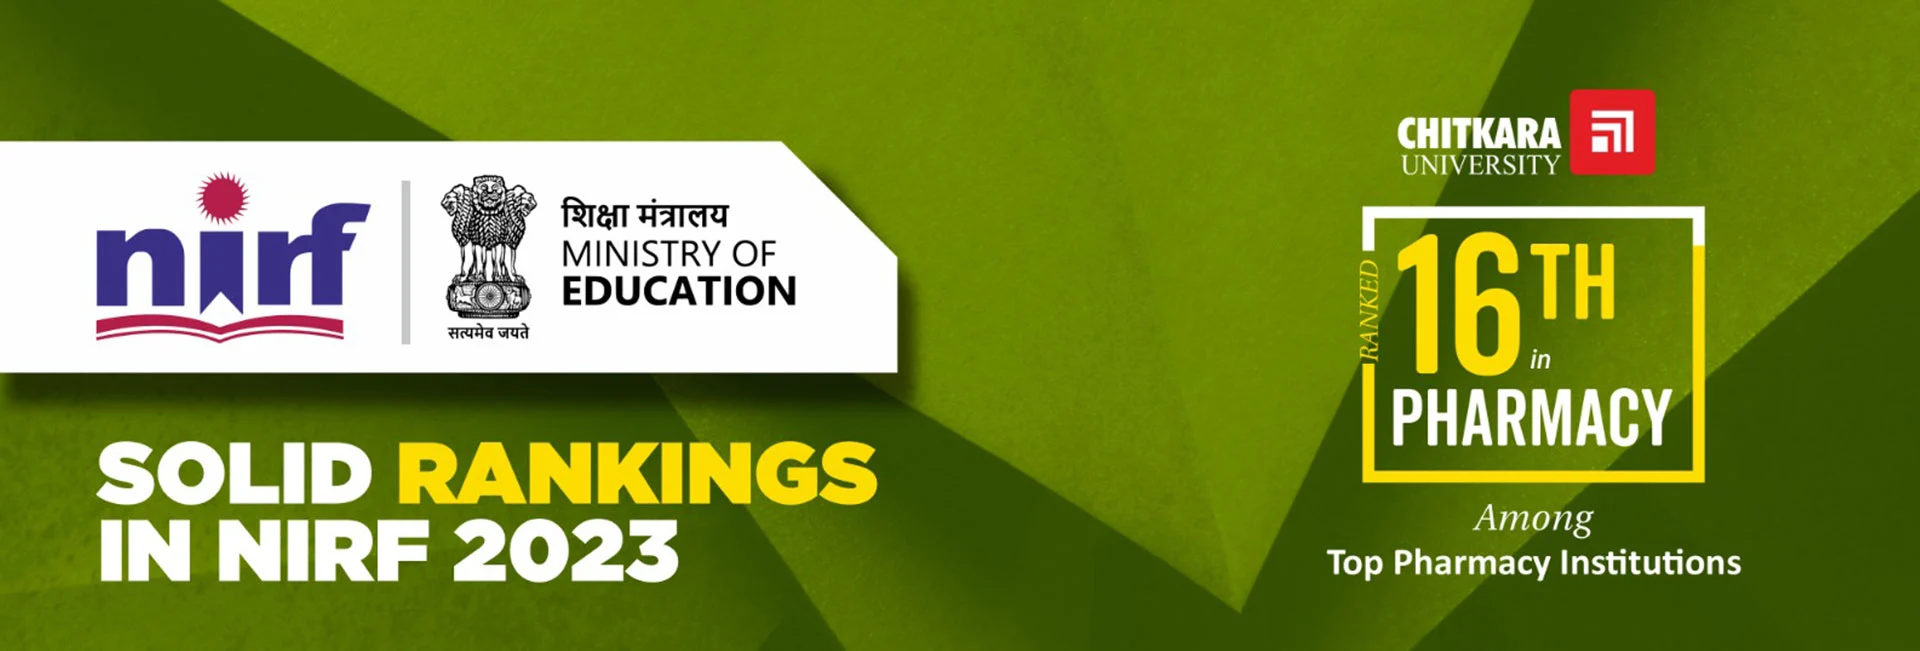 Chitkara University Solid Ranking